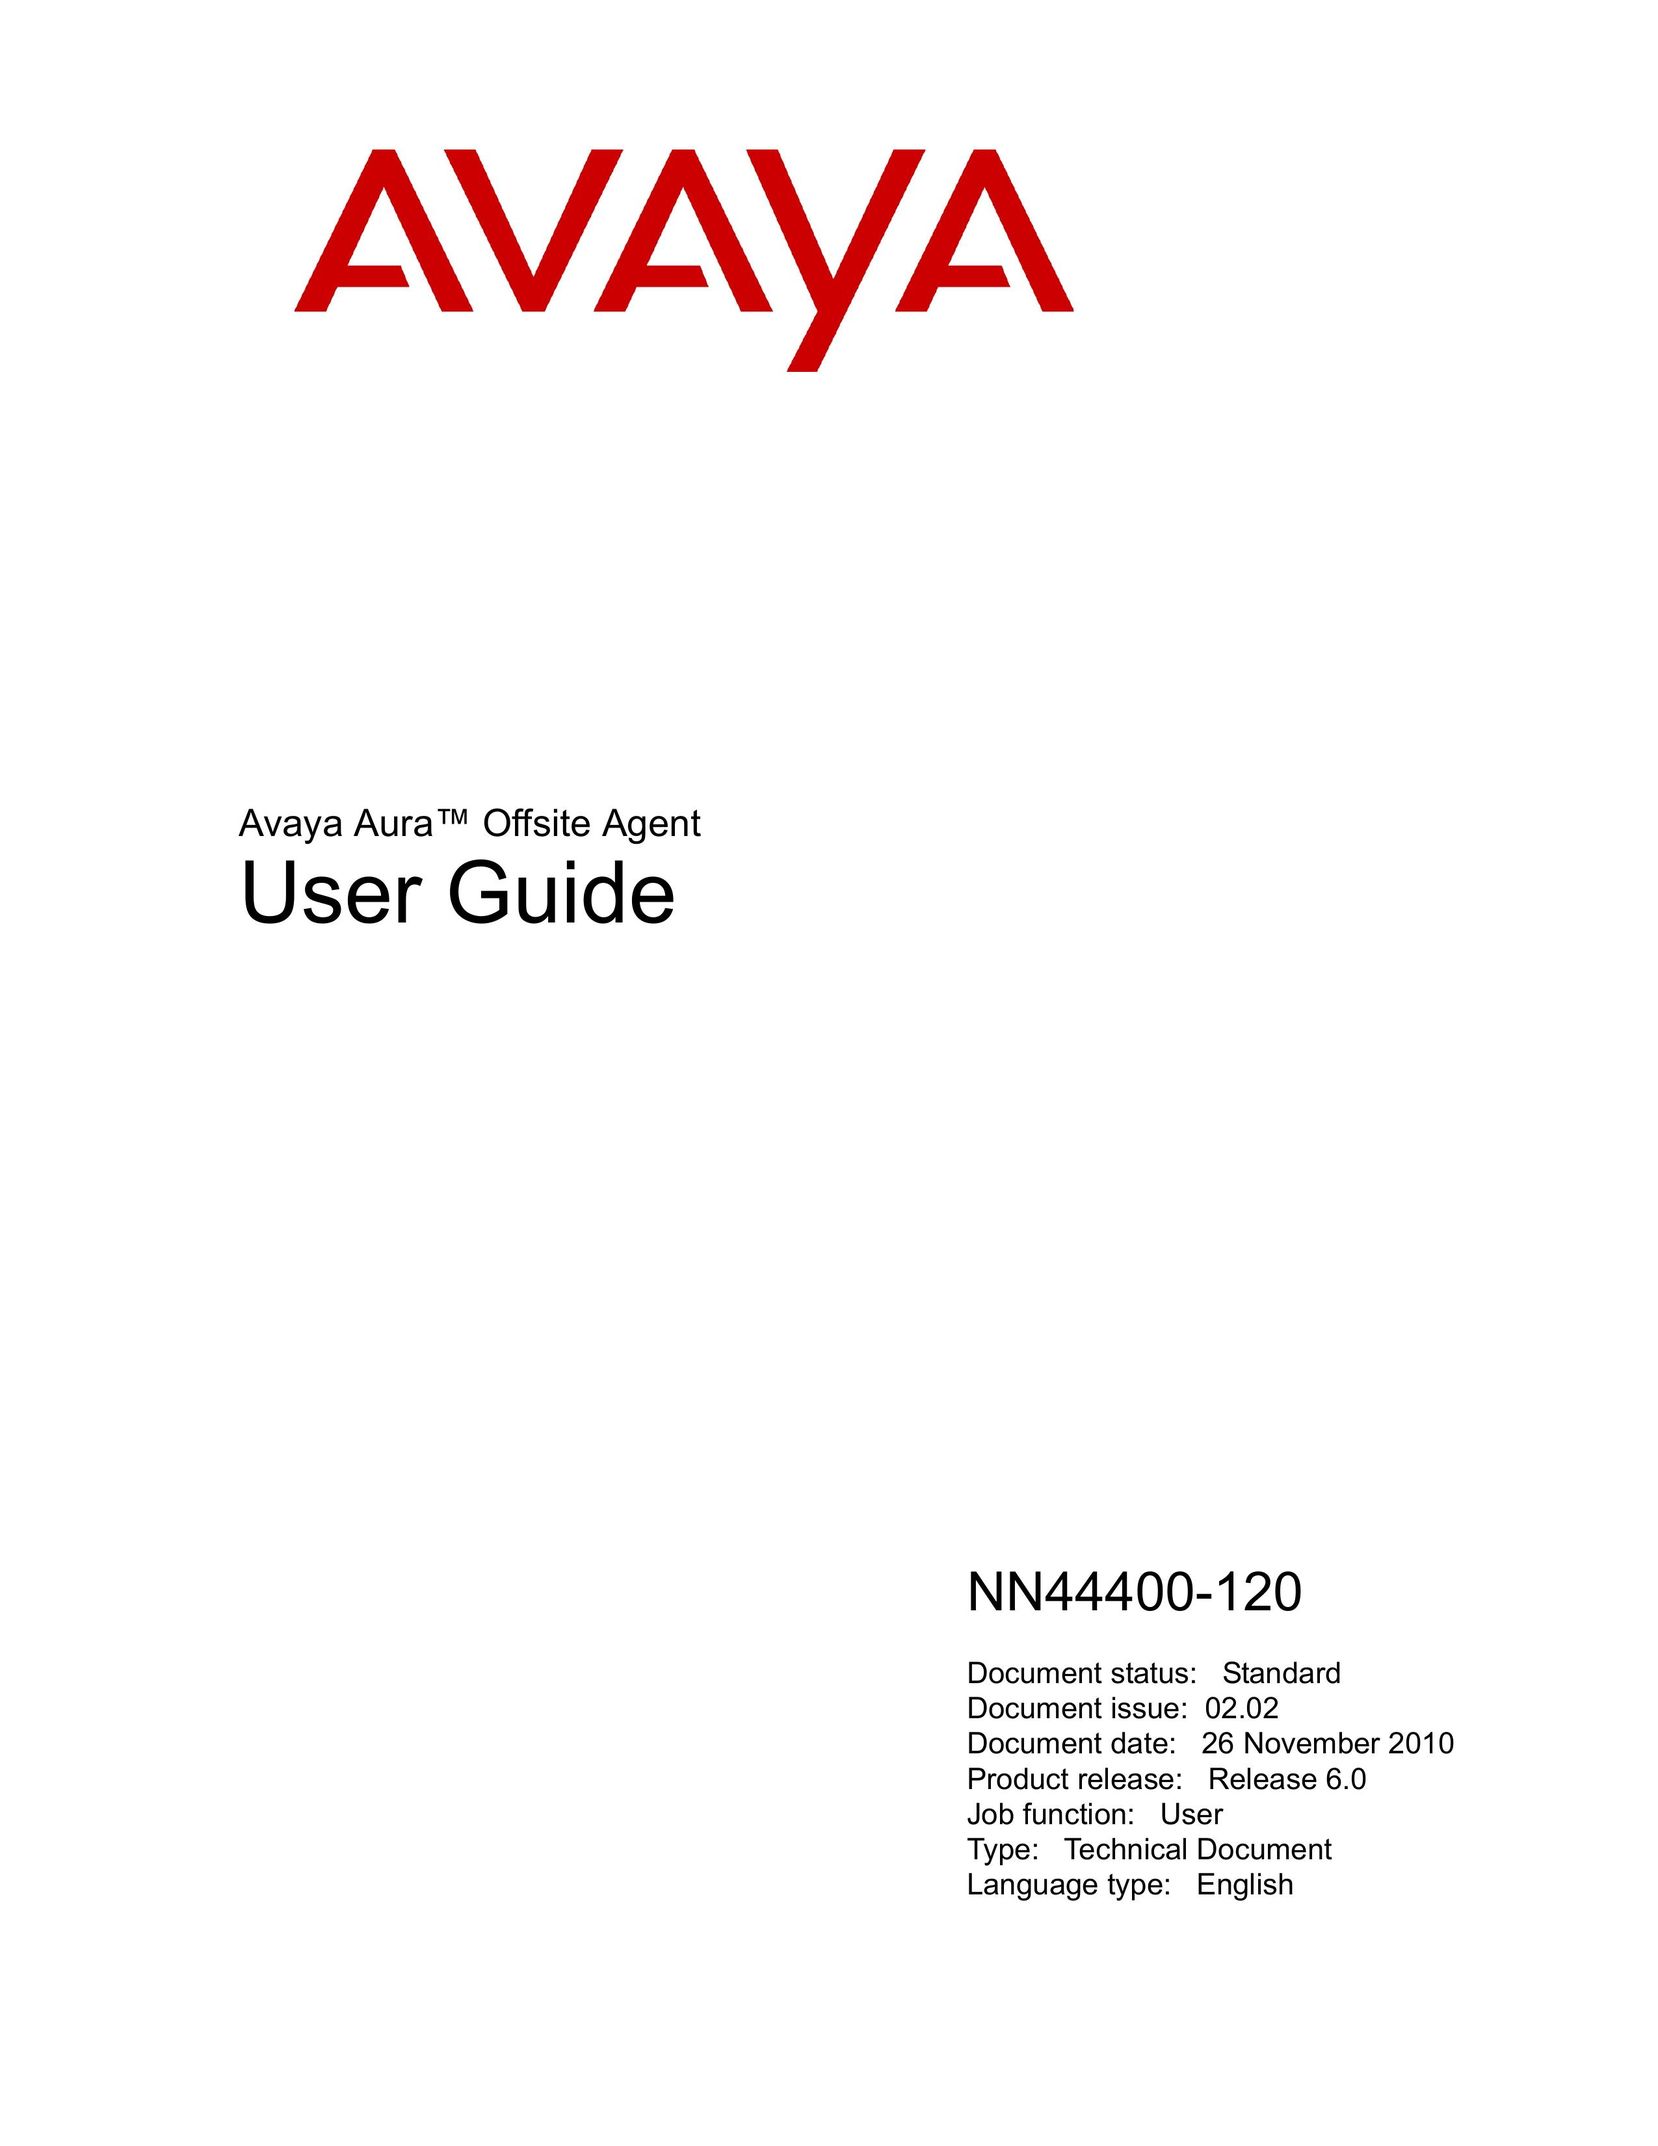 Avaya NN44400-120 Switch User Manual